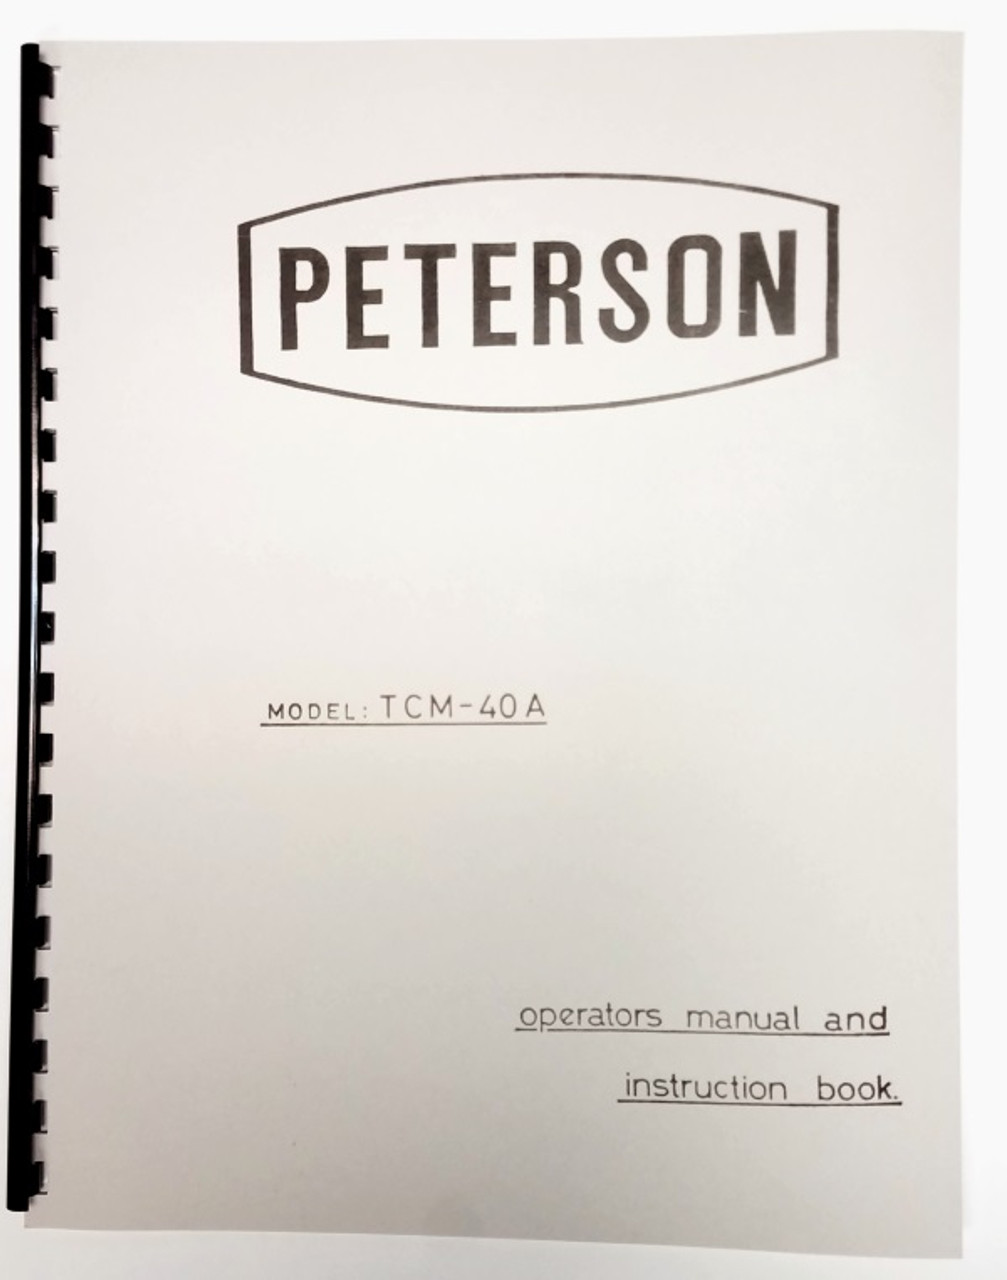 Peterson TCM-40 Manual